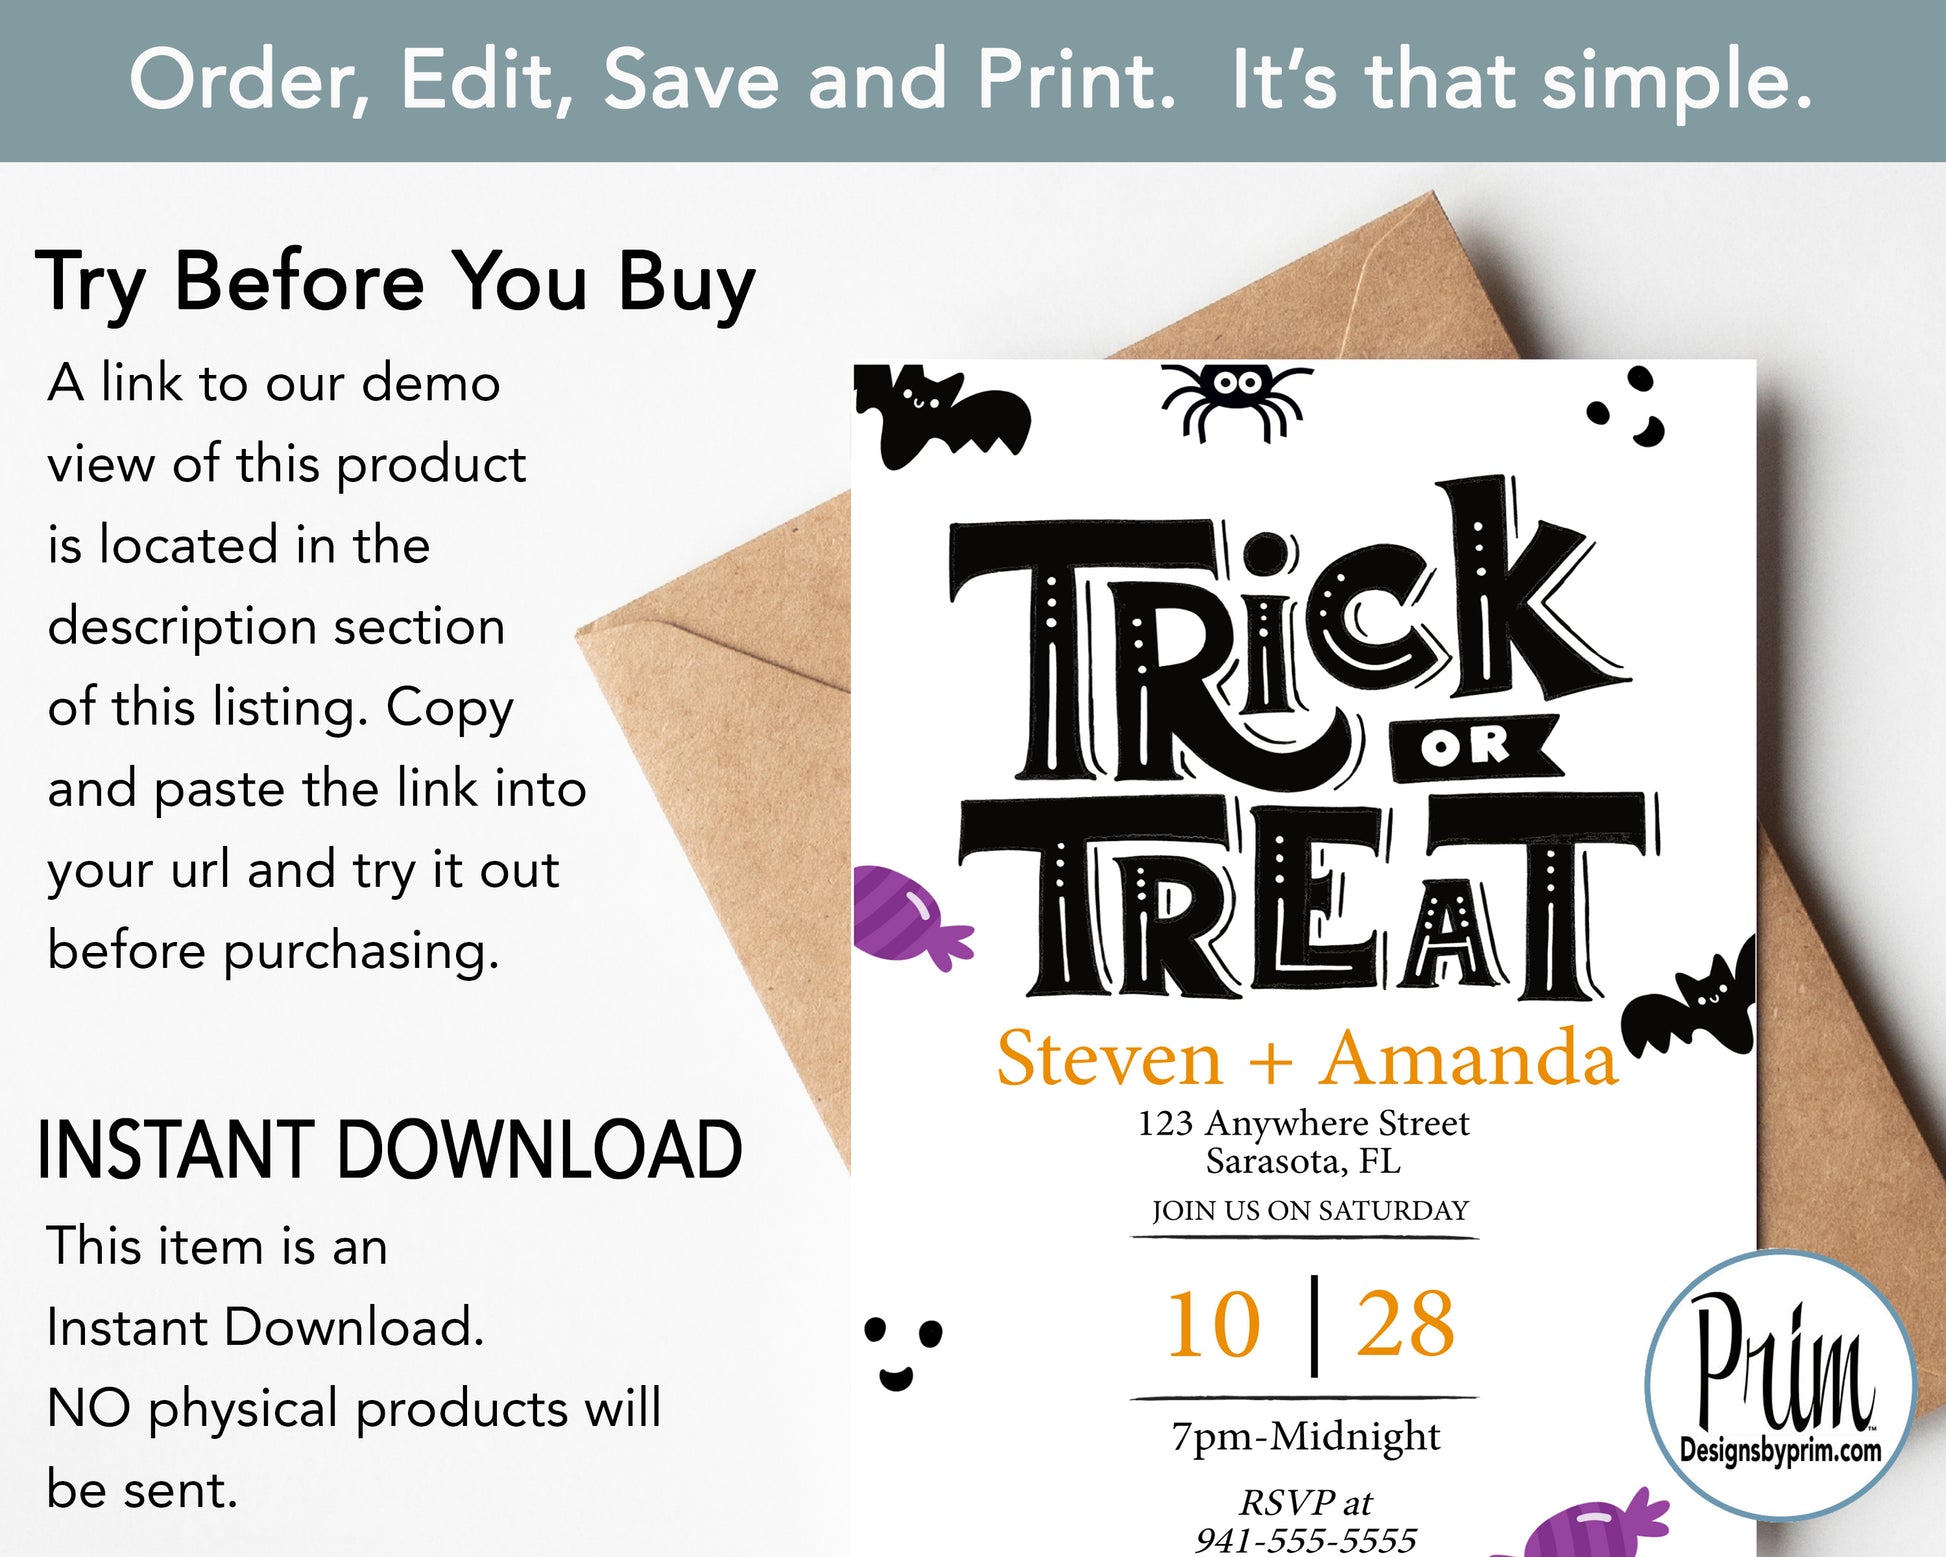 Designs by Prim Halloween Party Trick or Treat Invitation Print Digital | Pumpkin Bat Spiderweb Spooky Season Editable Template INSTANT DOWNLOAD Cell Phone